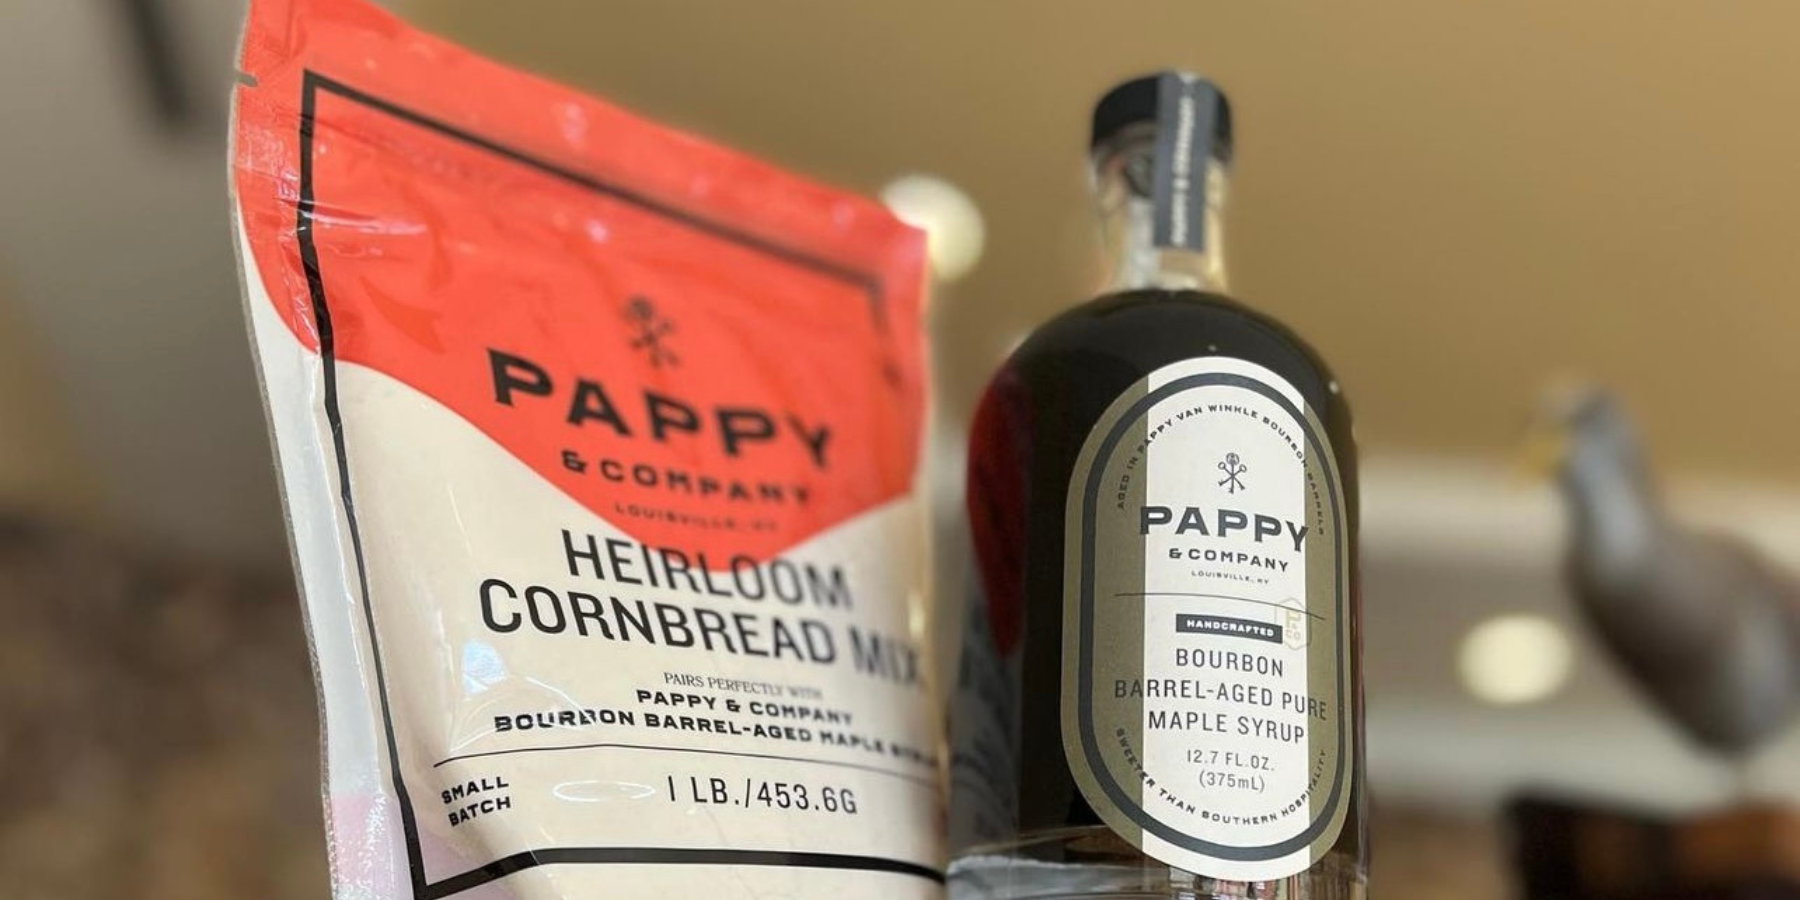 Pappy & Company Heirloom Cornbread Recipe